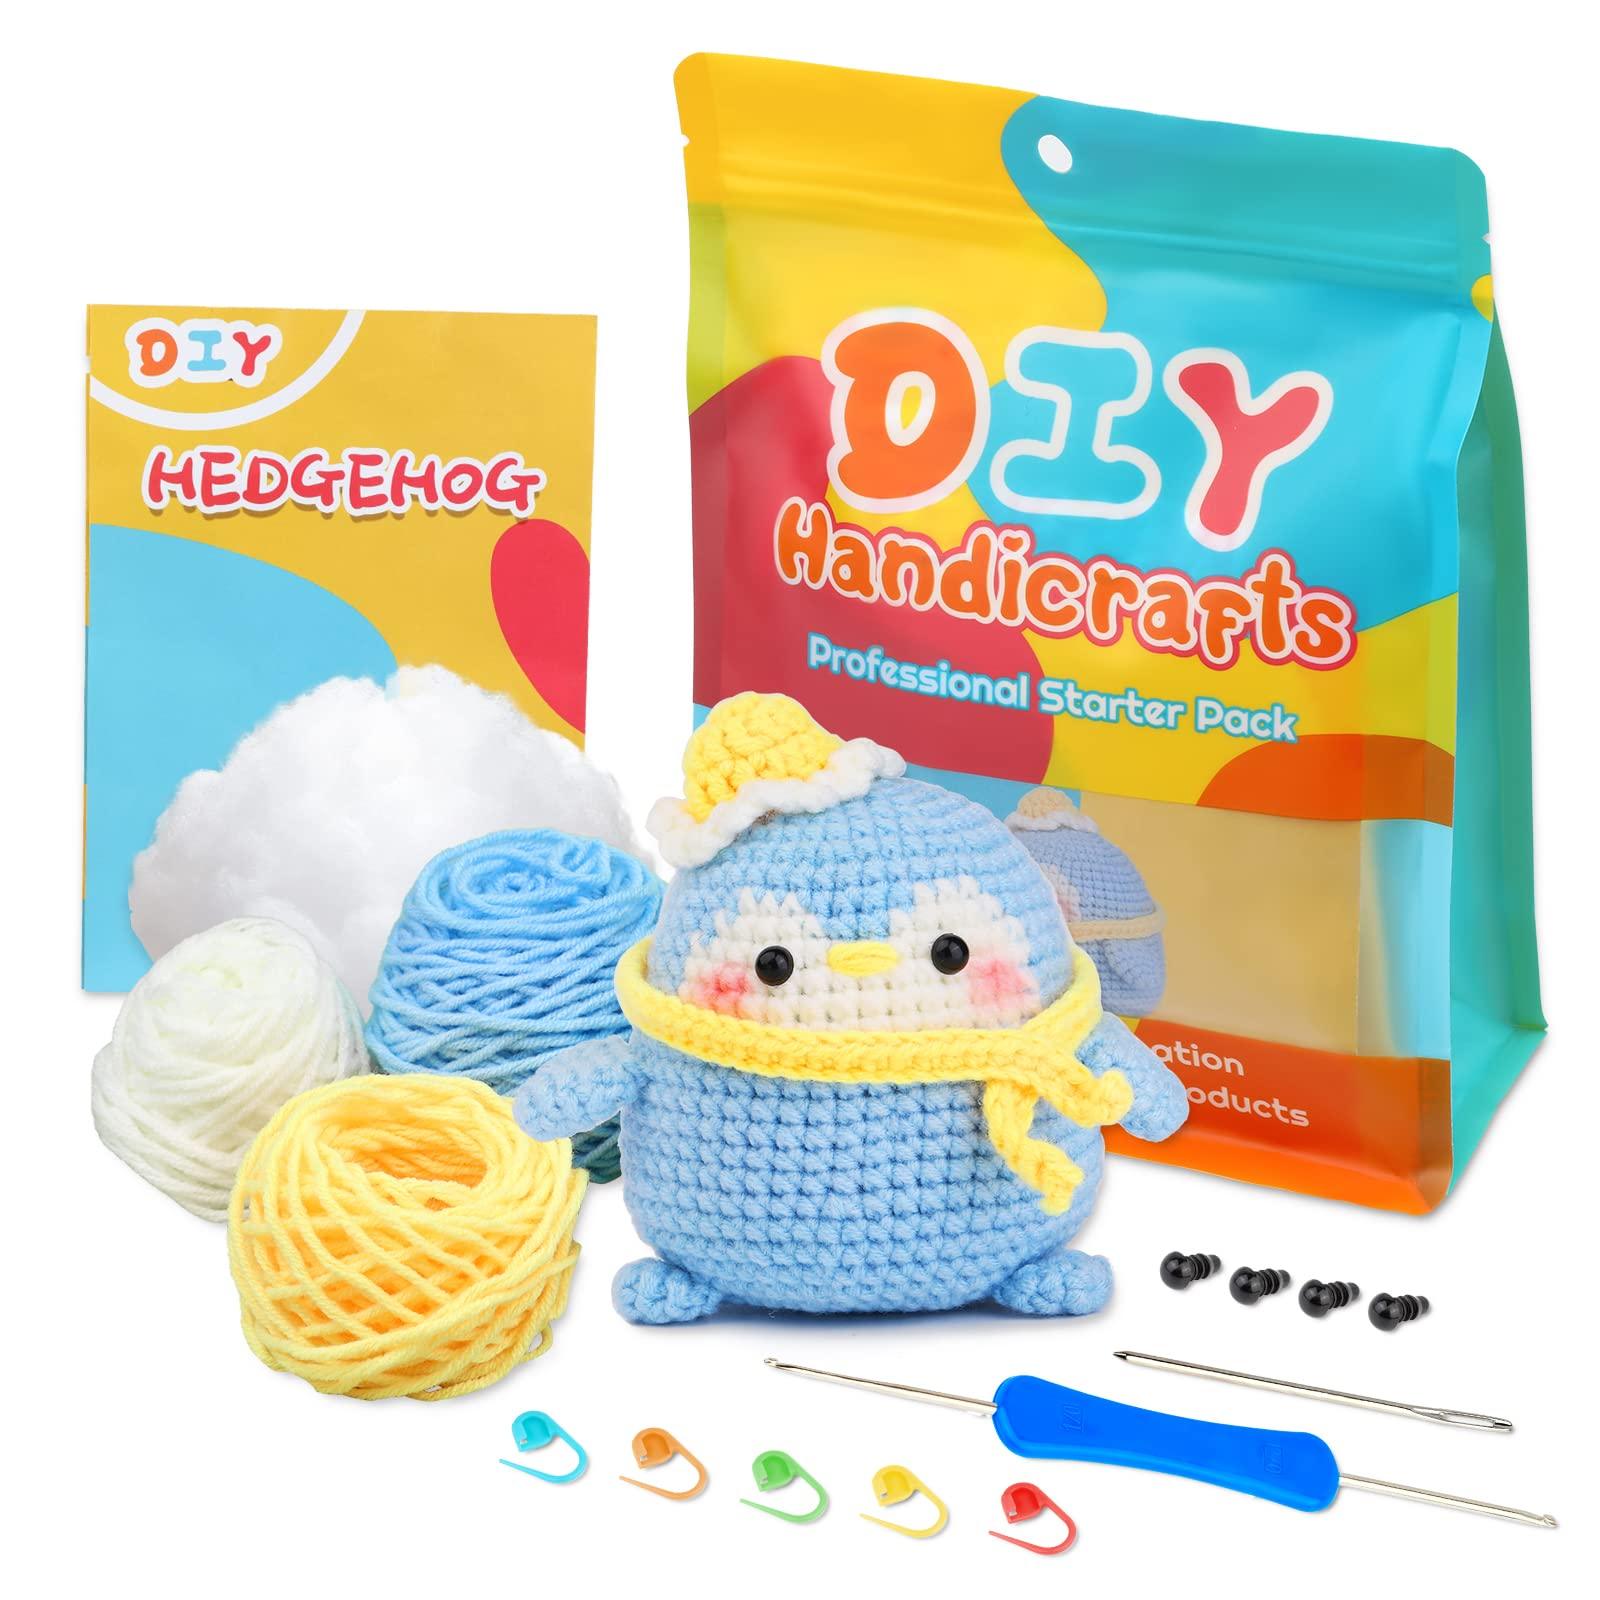 Cute Penguin Animals Crochet Kit, Crochet Materials Kit With Video